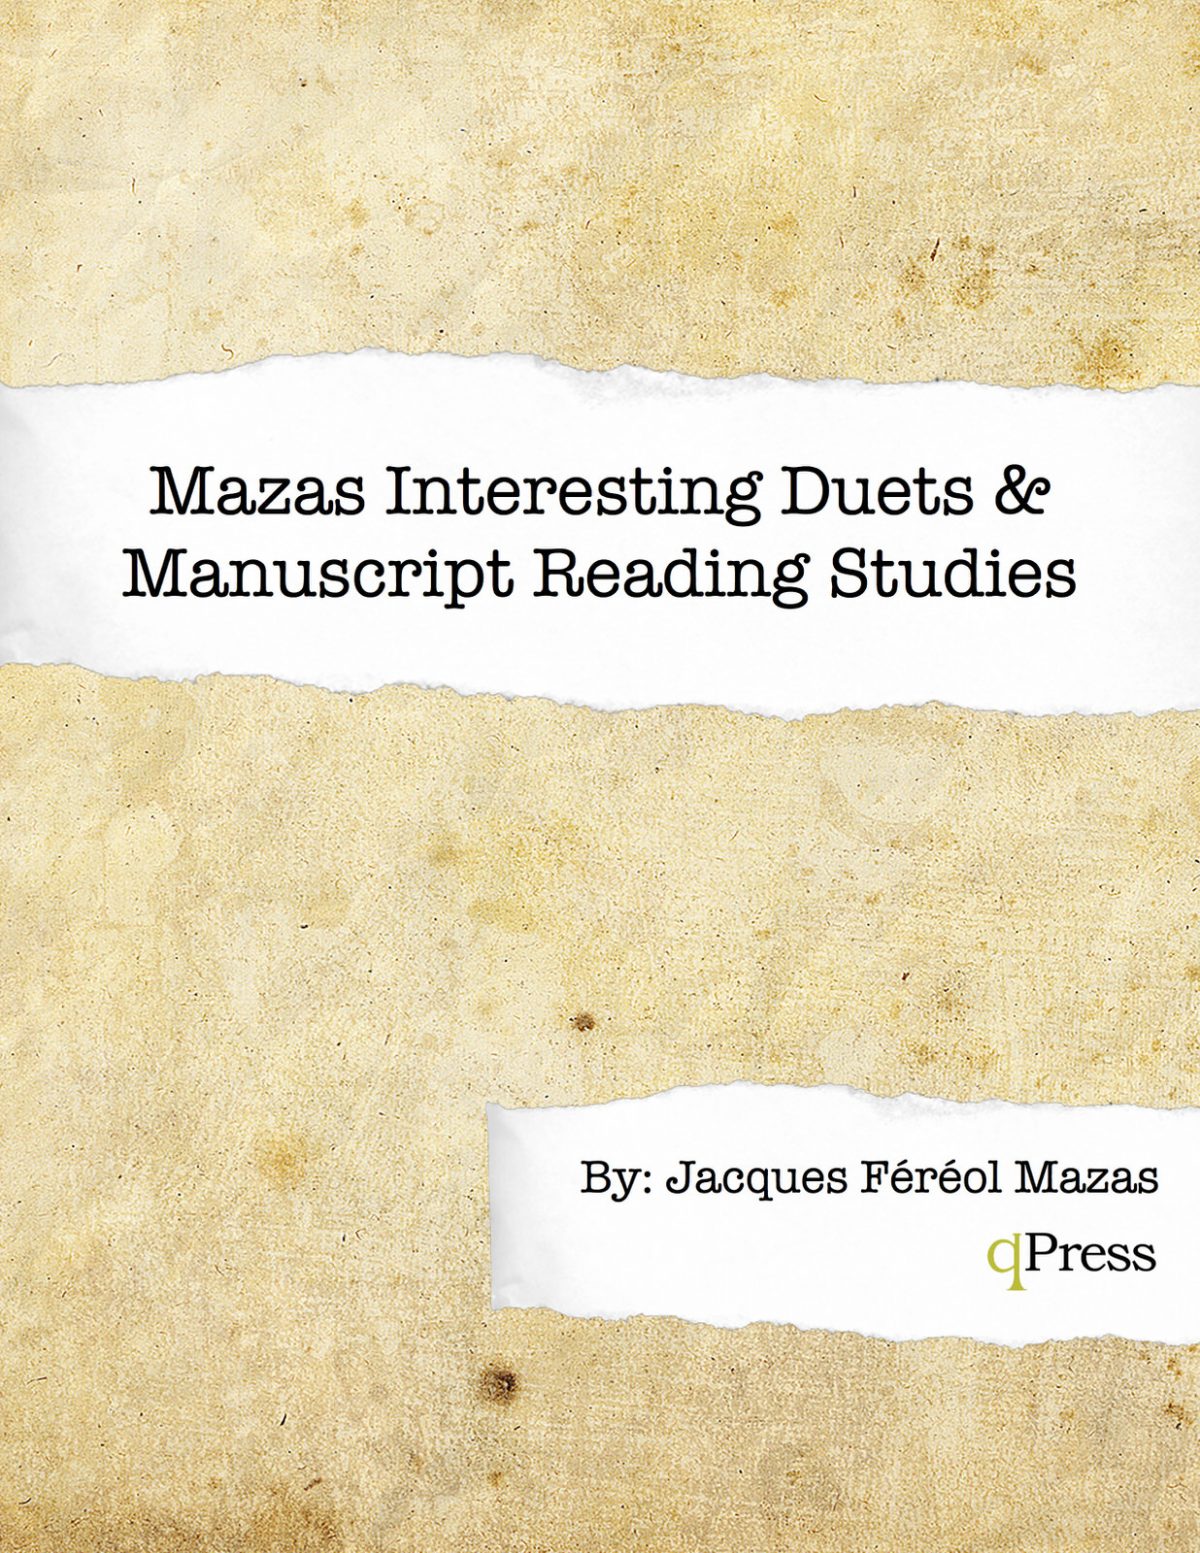 Mazas Interesting Duets and Manuscript Reading Studies